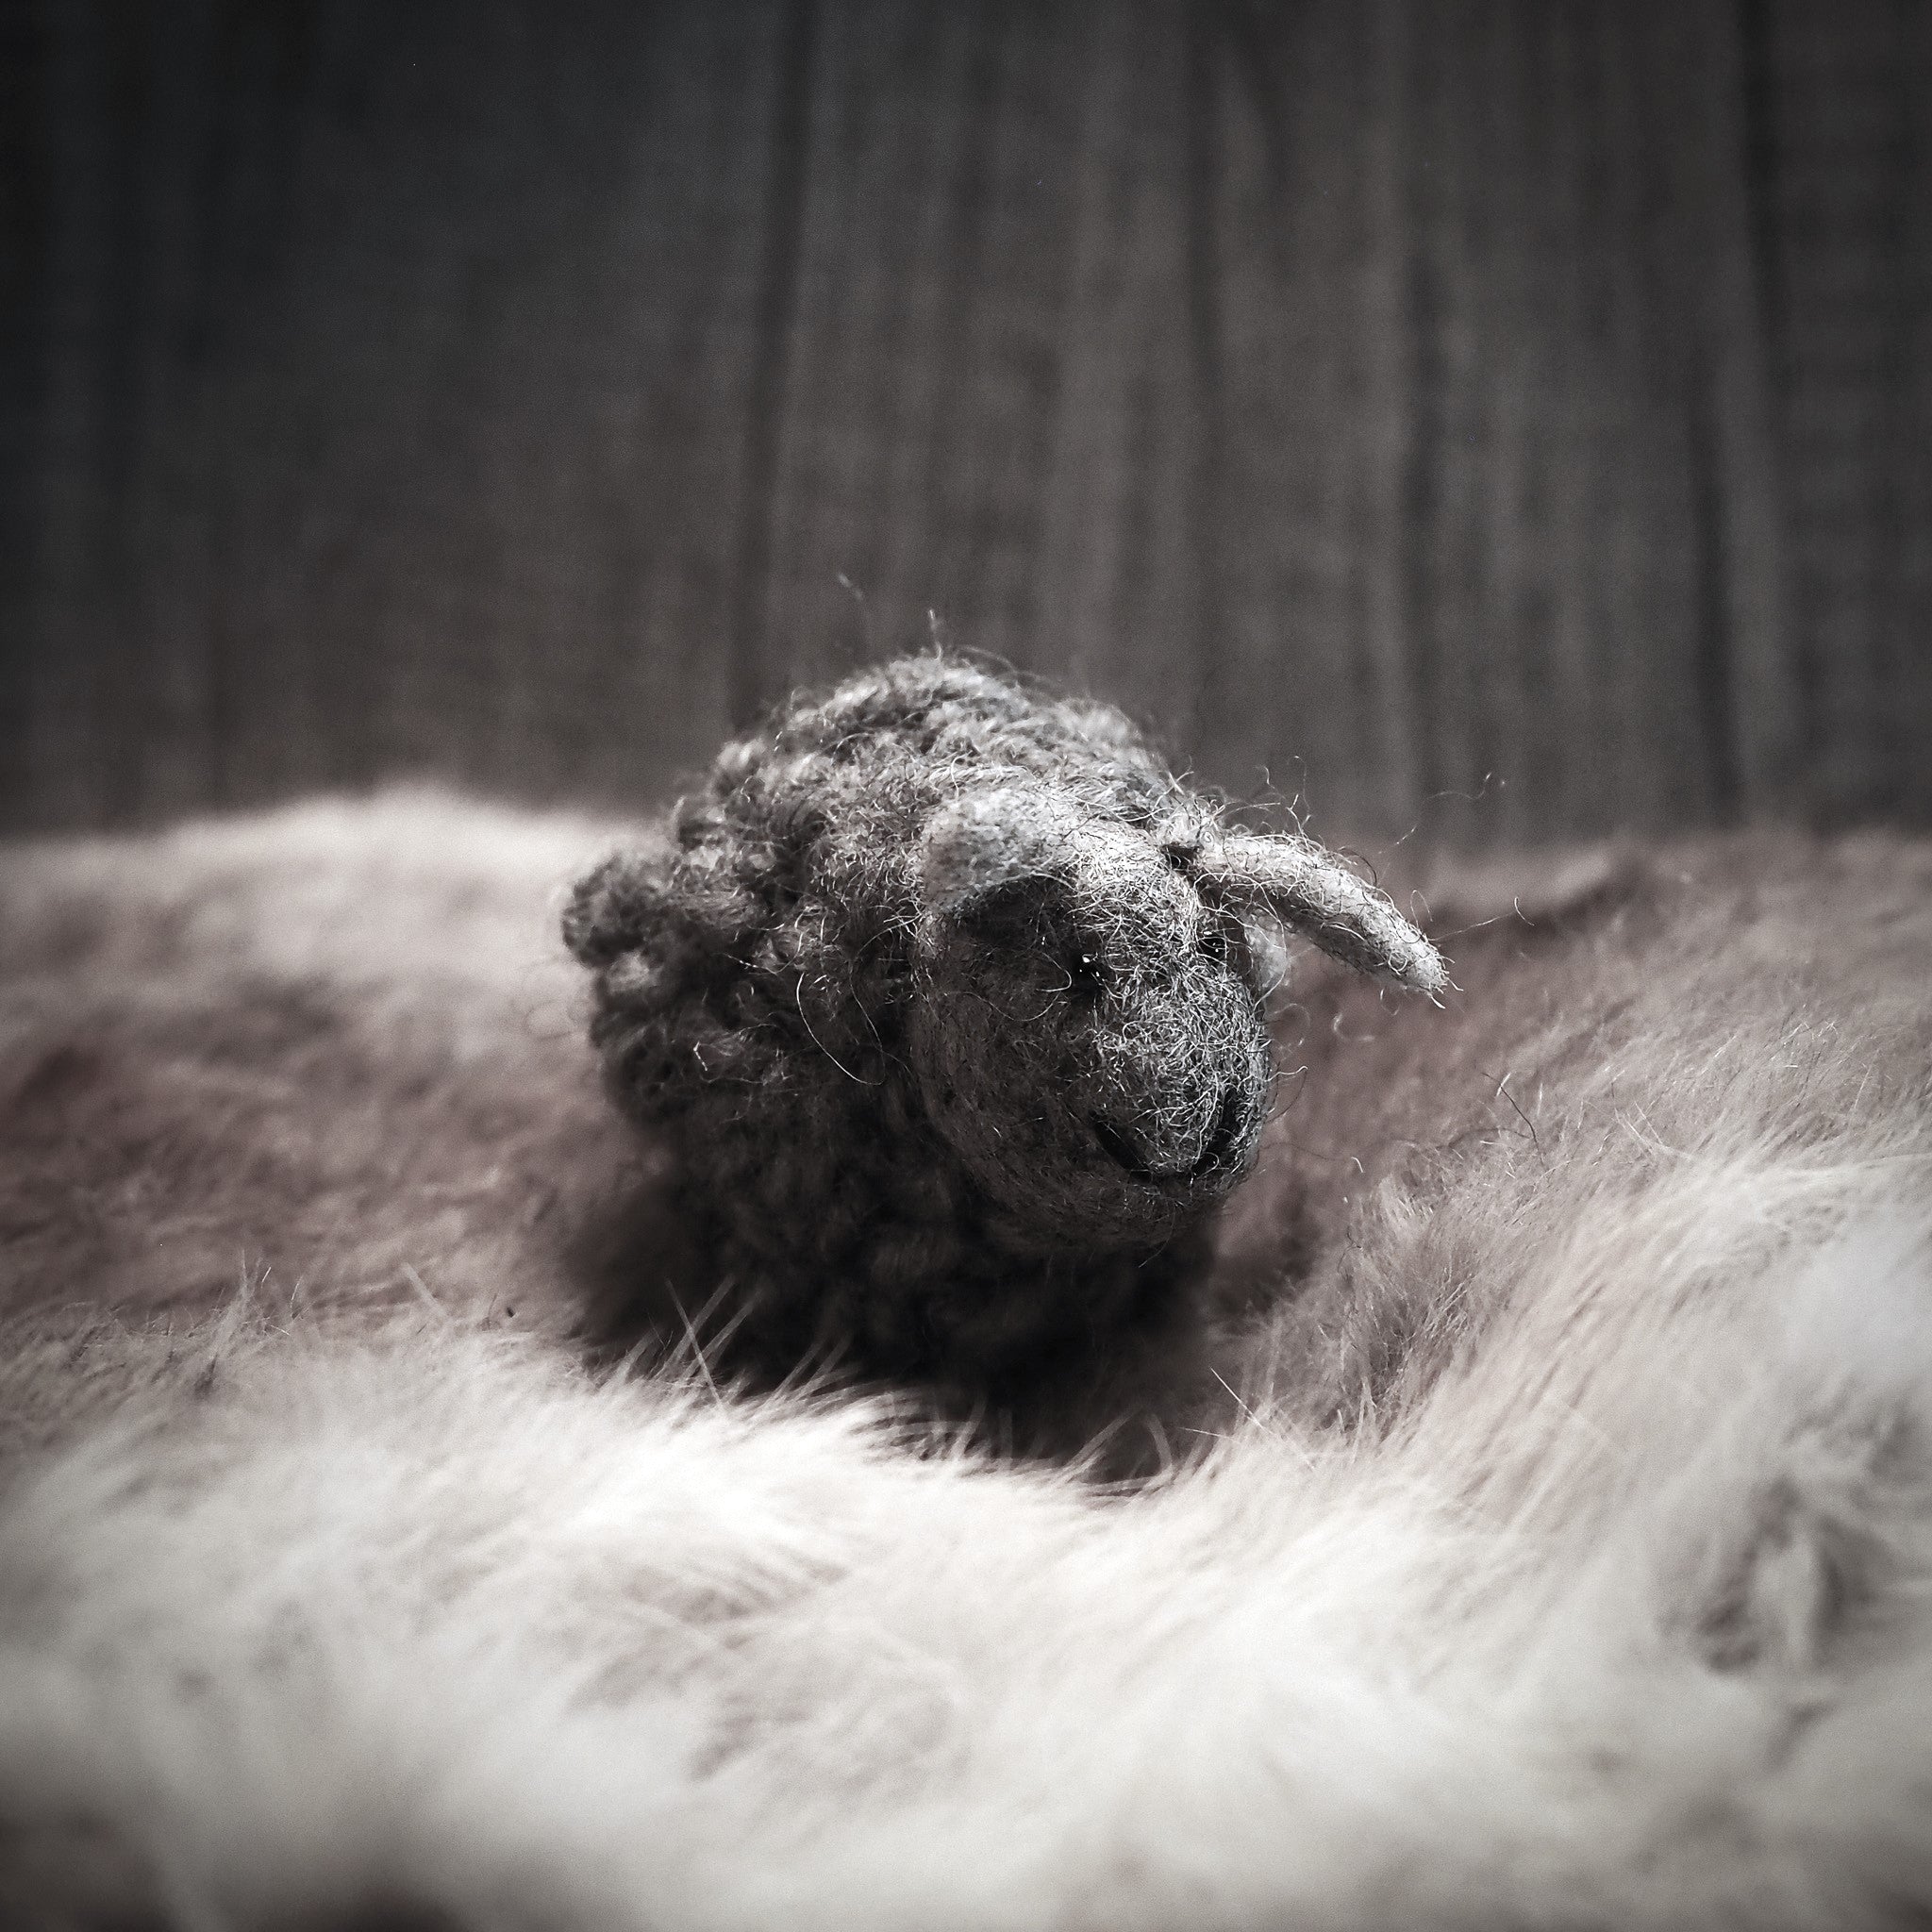 Mini cuddly sheep